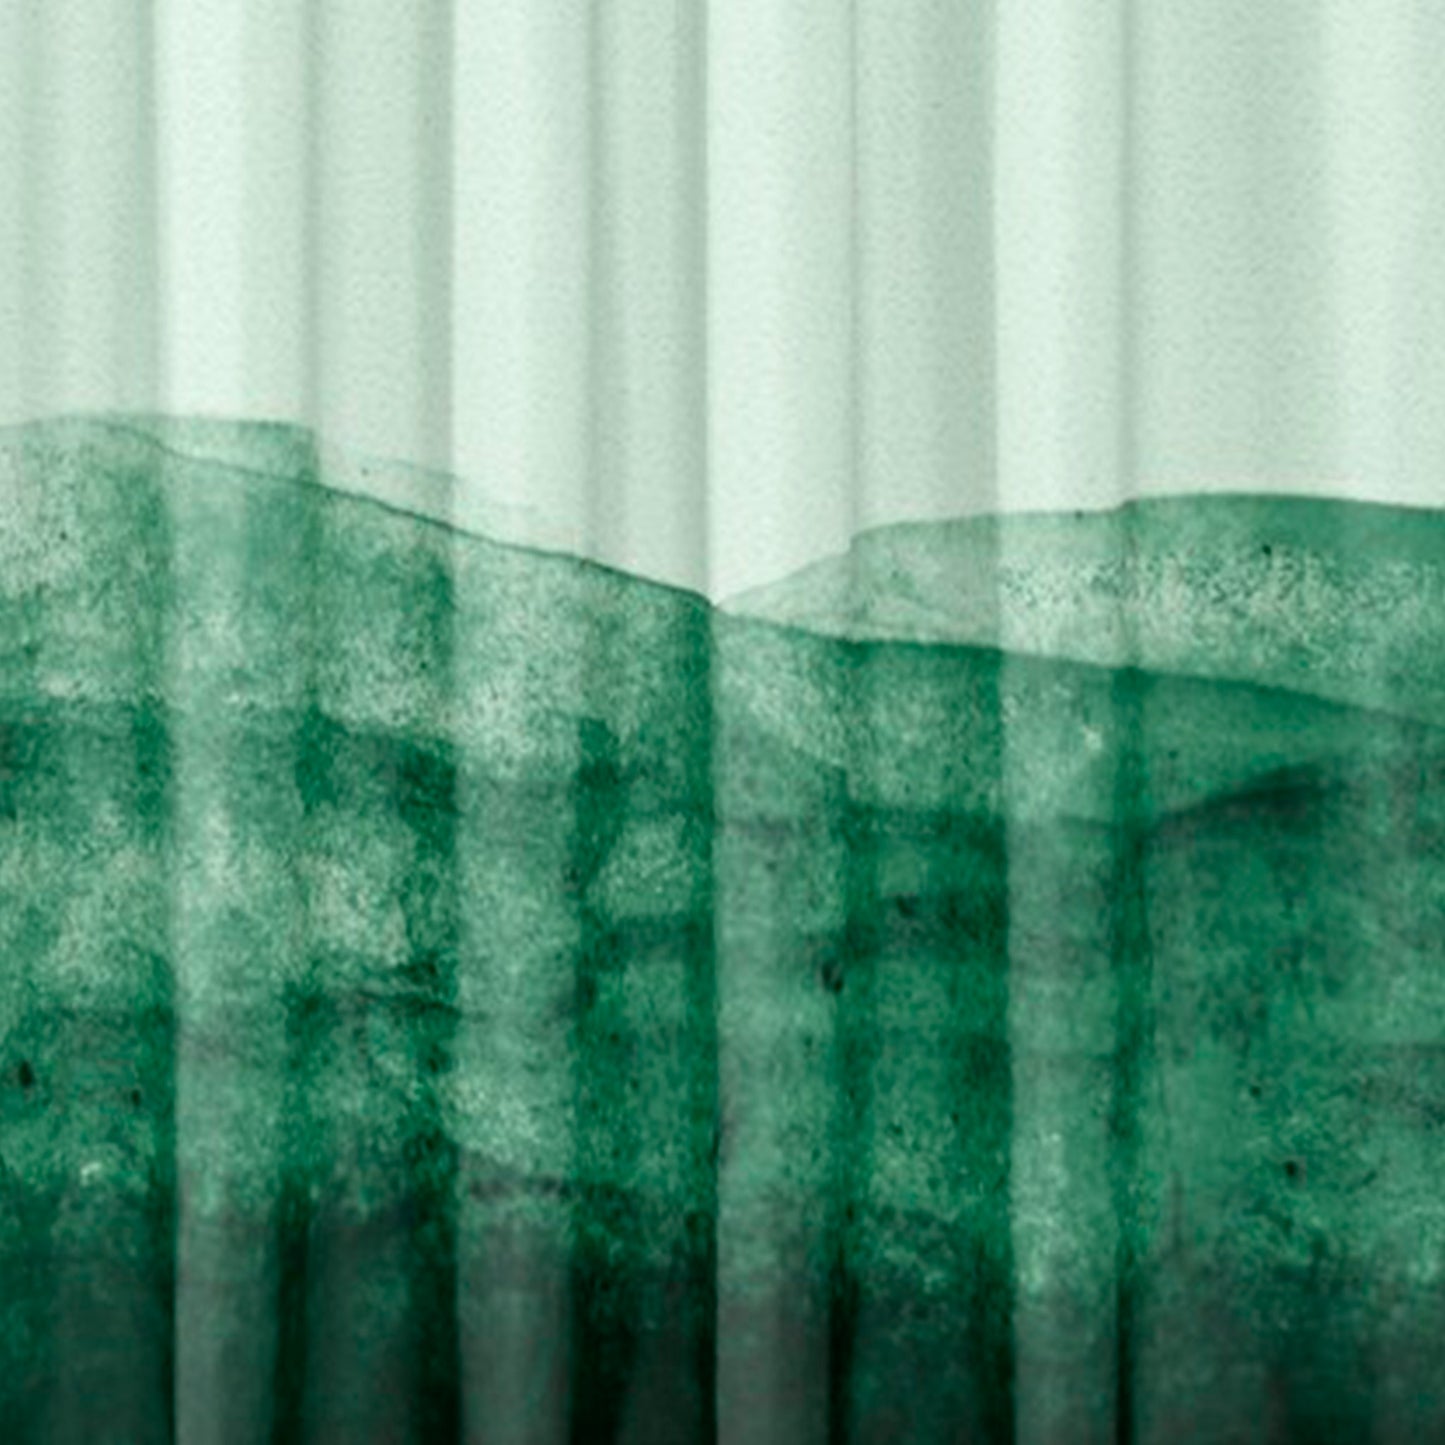 Green Landscape Watercolor Shower Curtain